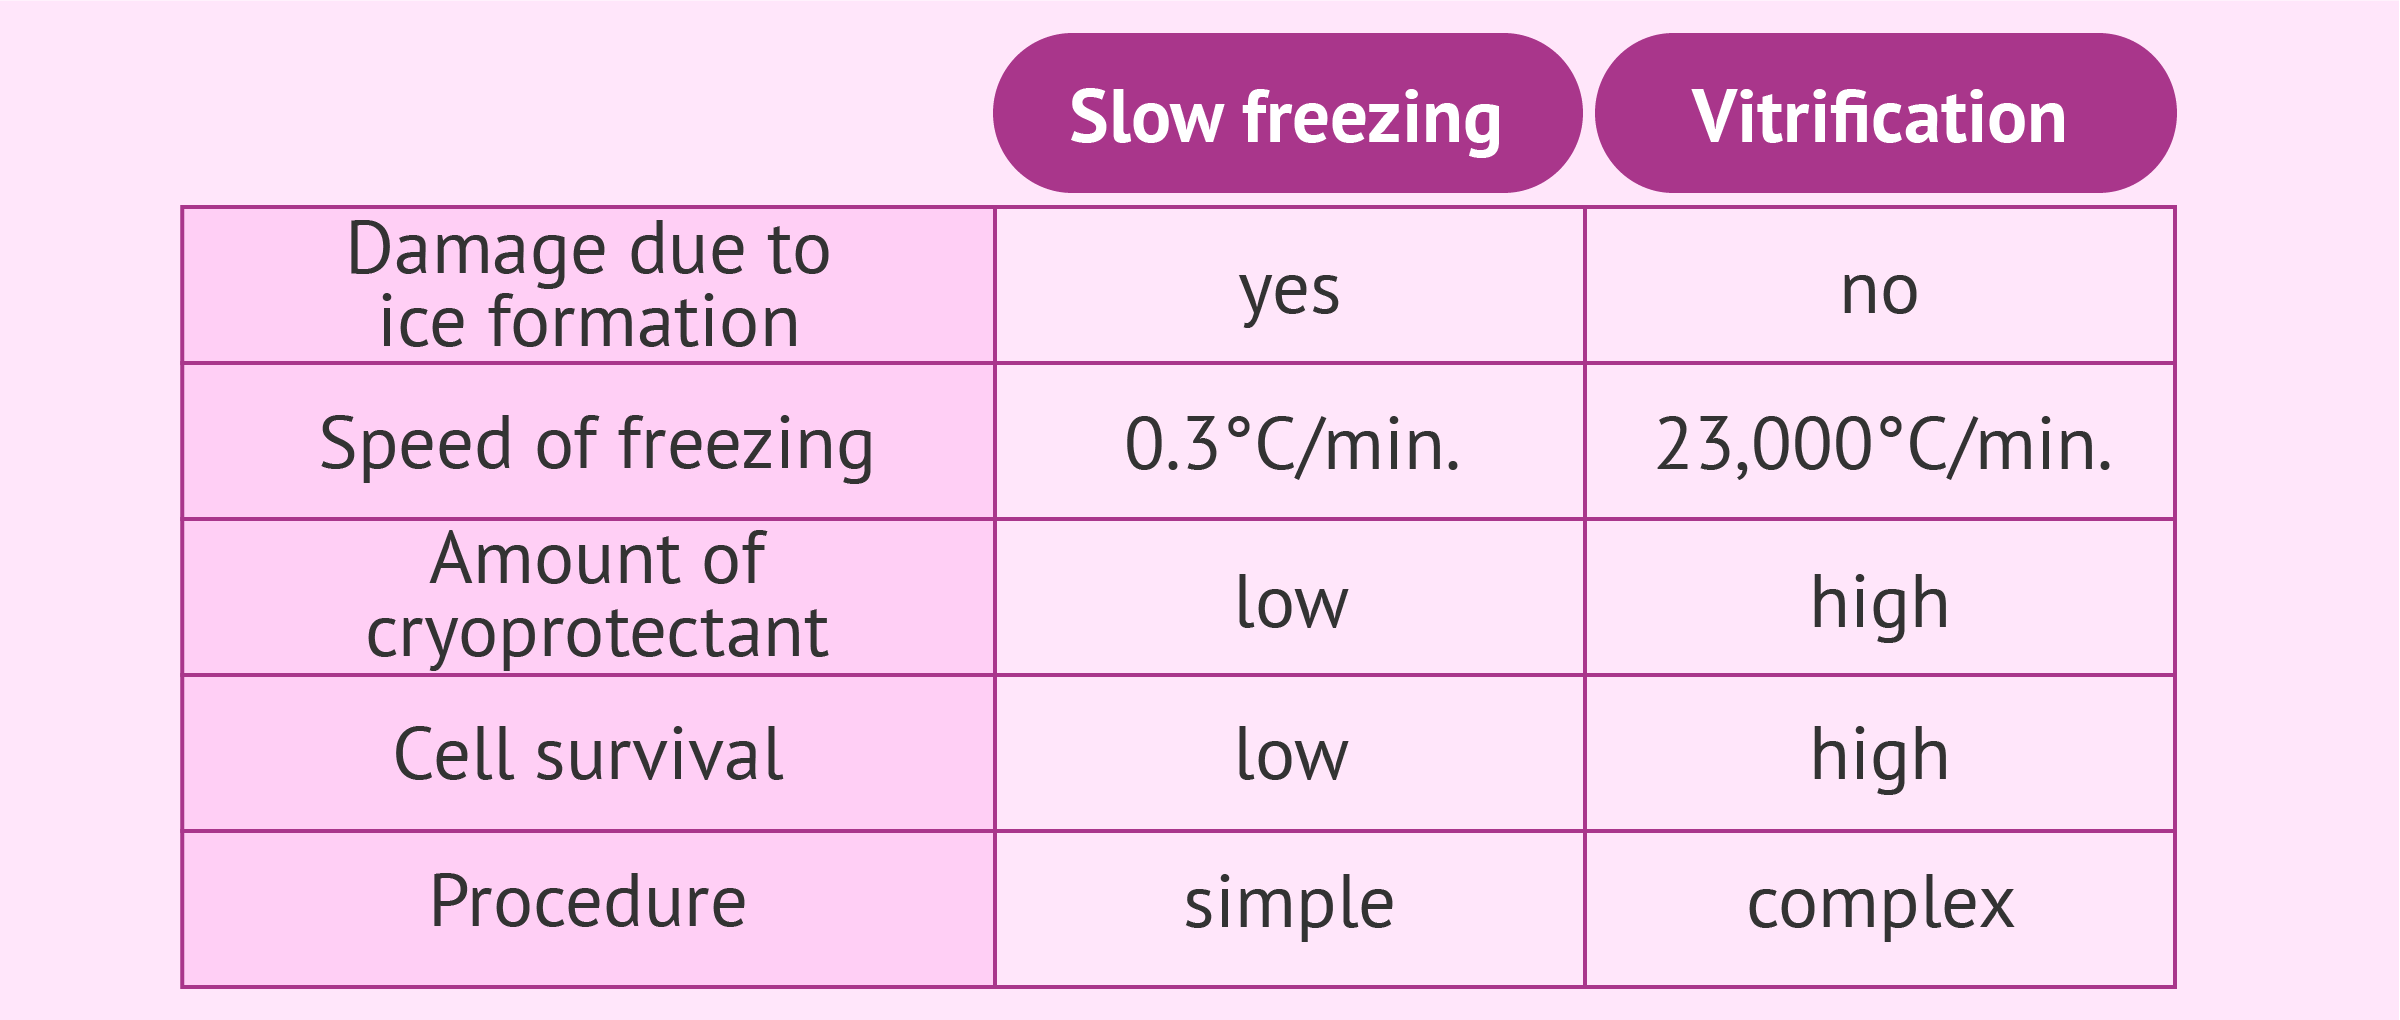 Slow freezing vs. vitrification of gametes and embryos